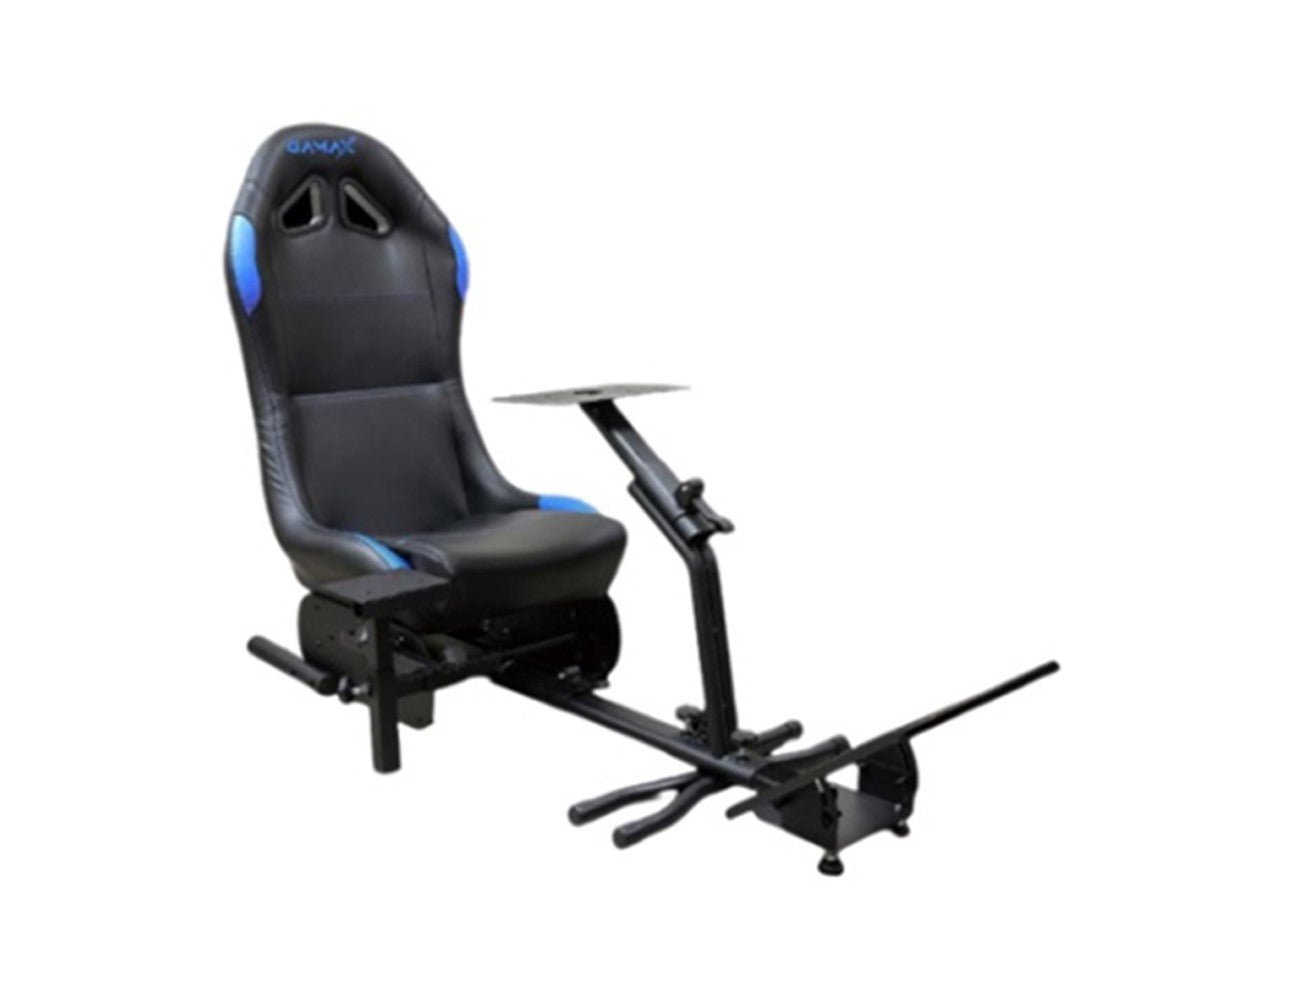 GAMAX Racing Seat - Black/Blue